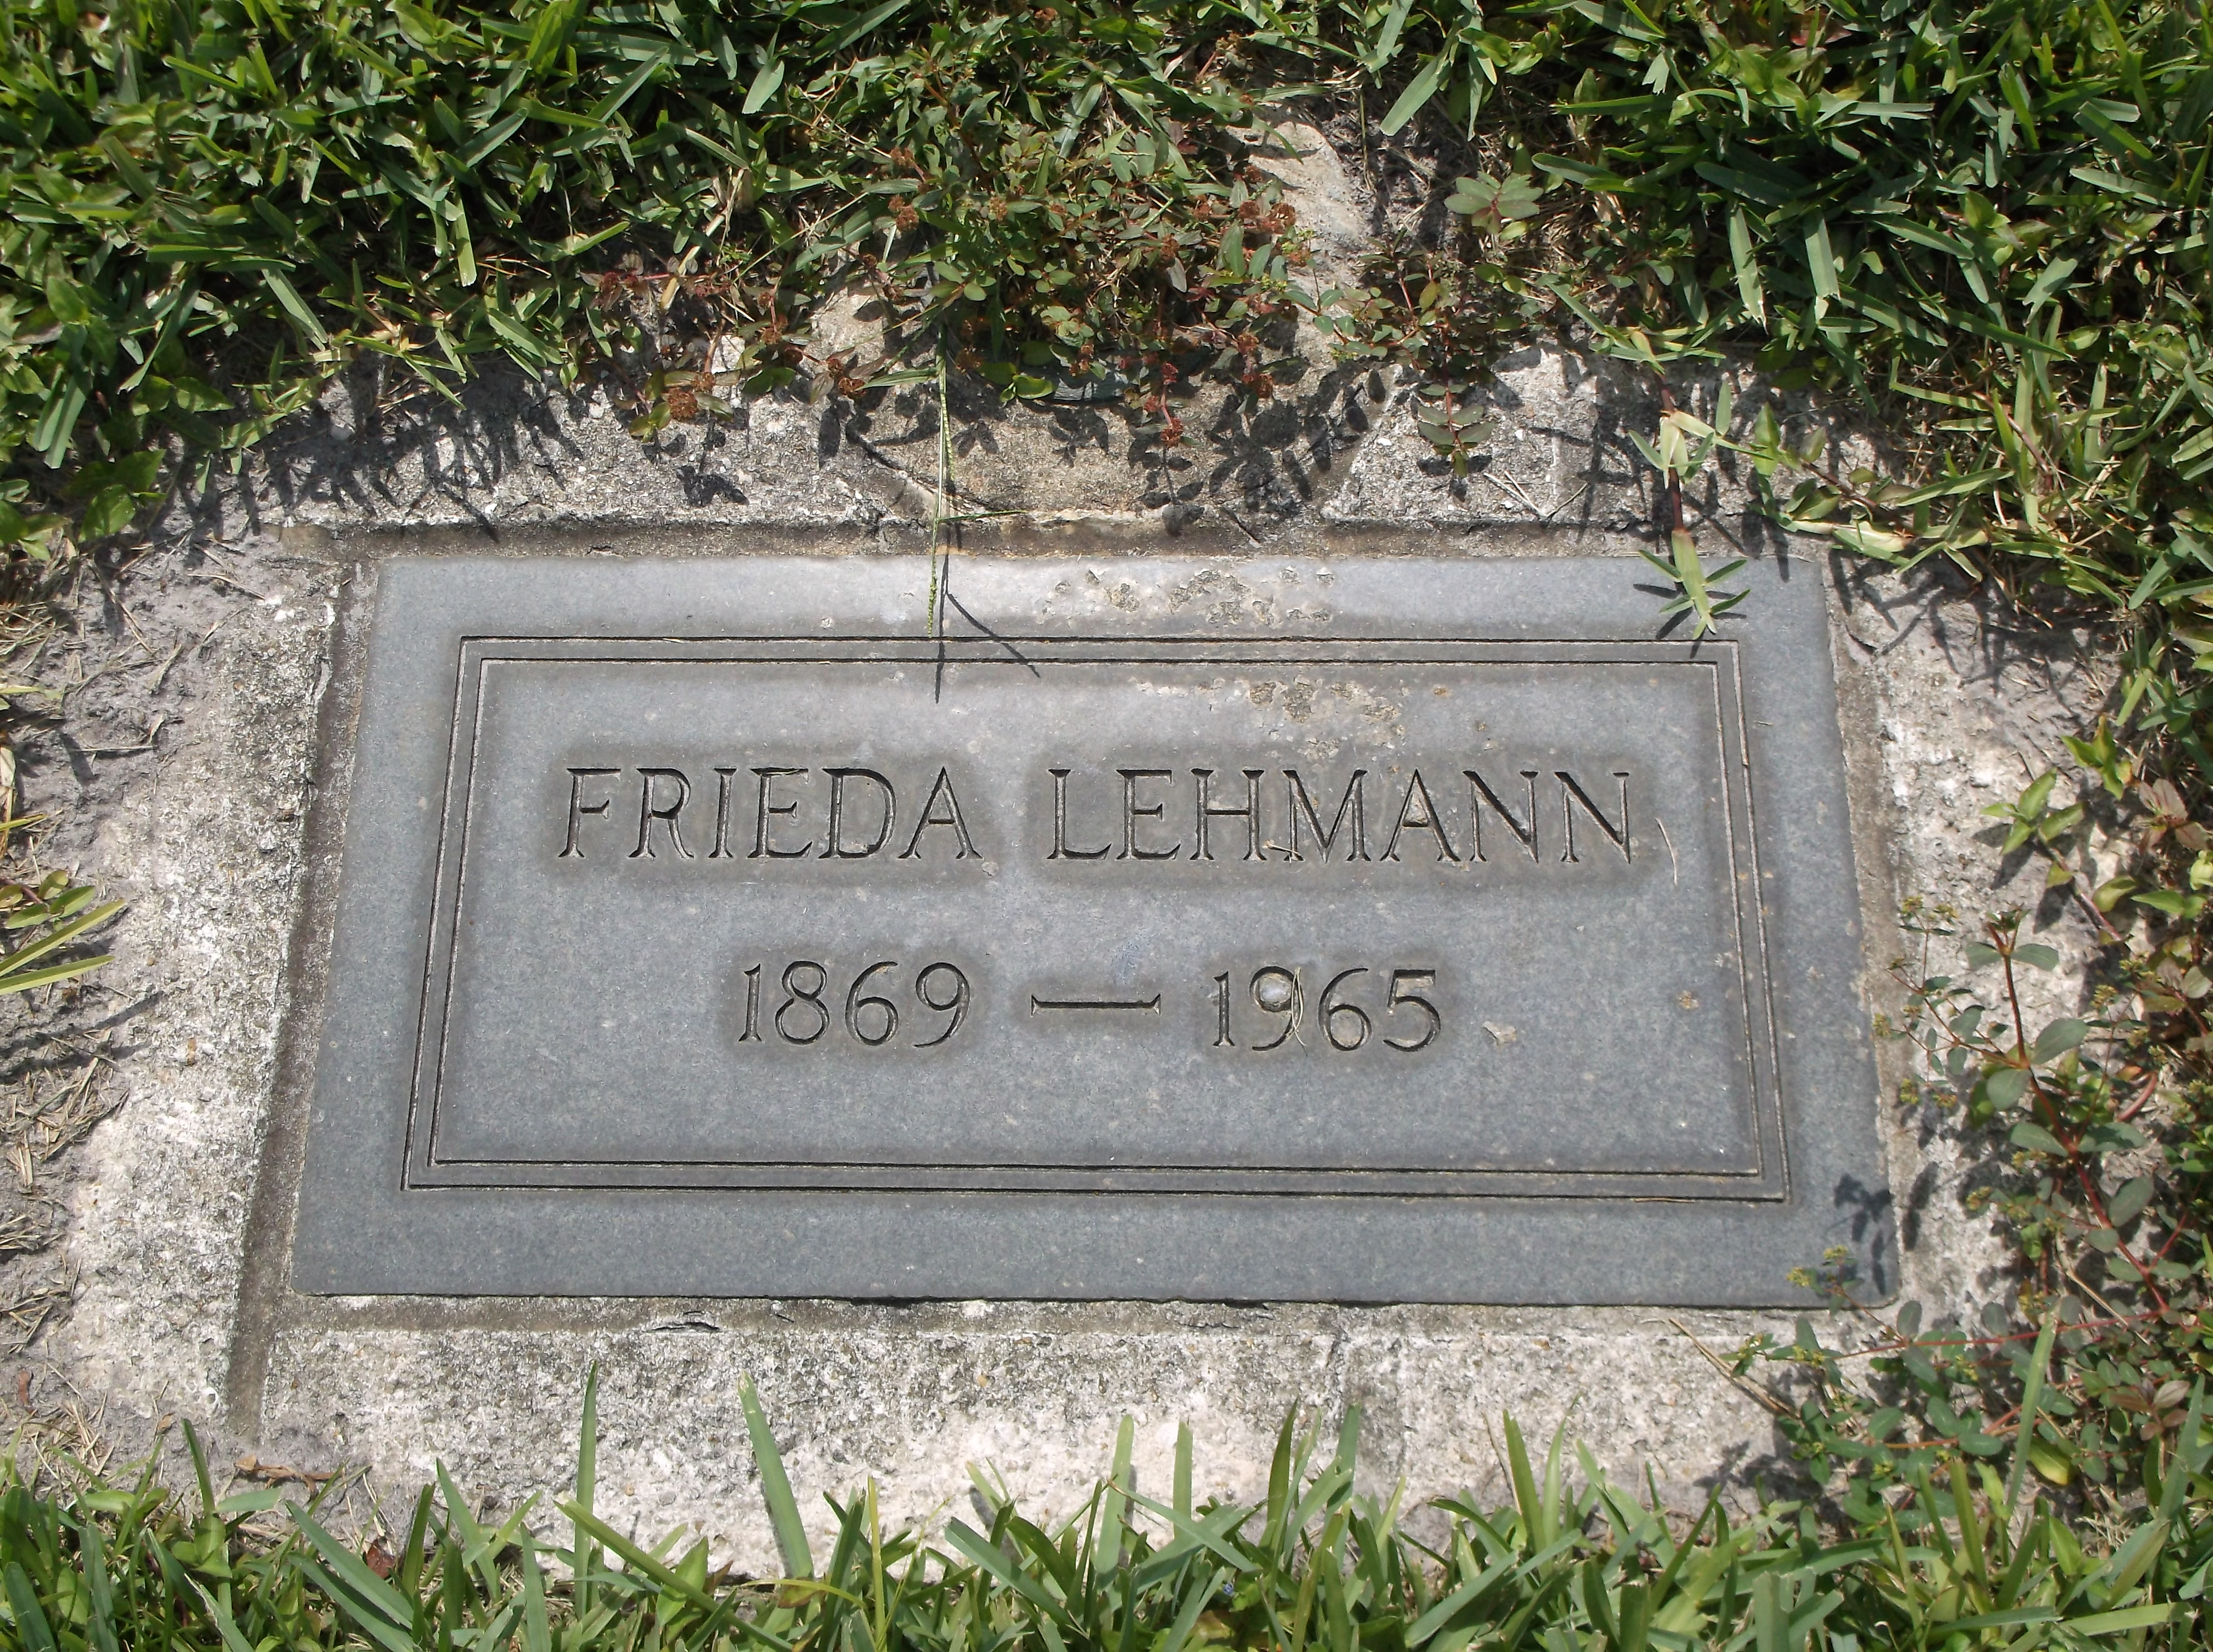 Frieda Lehmann